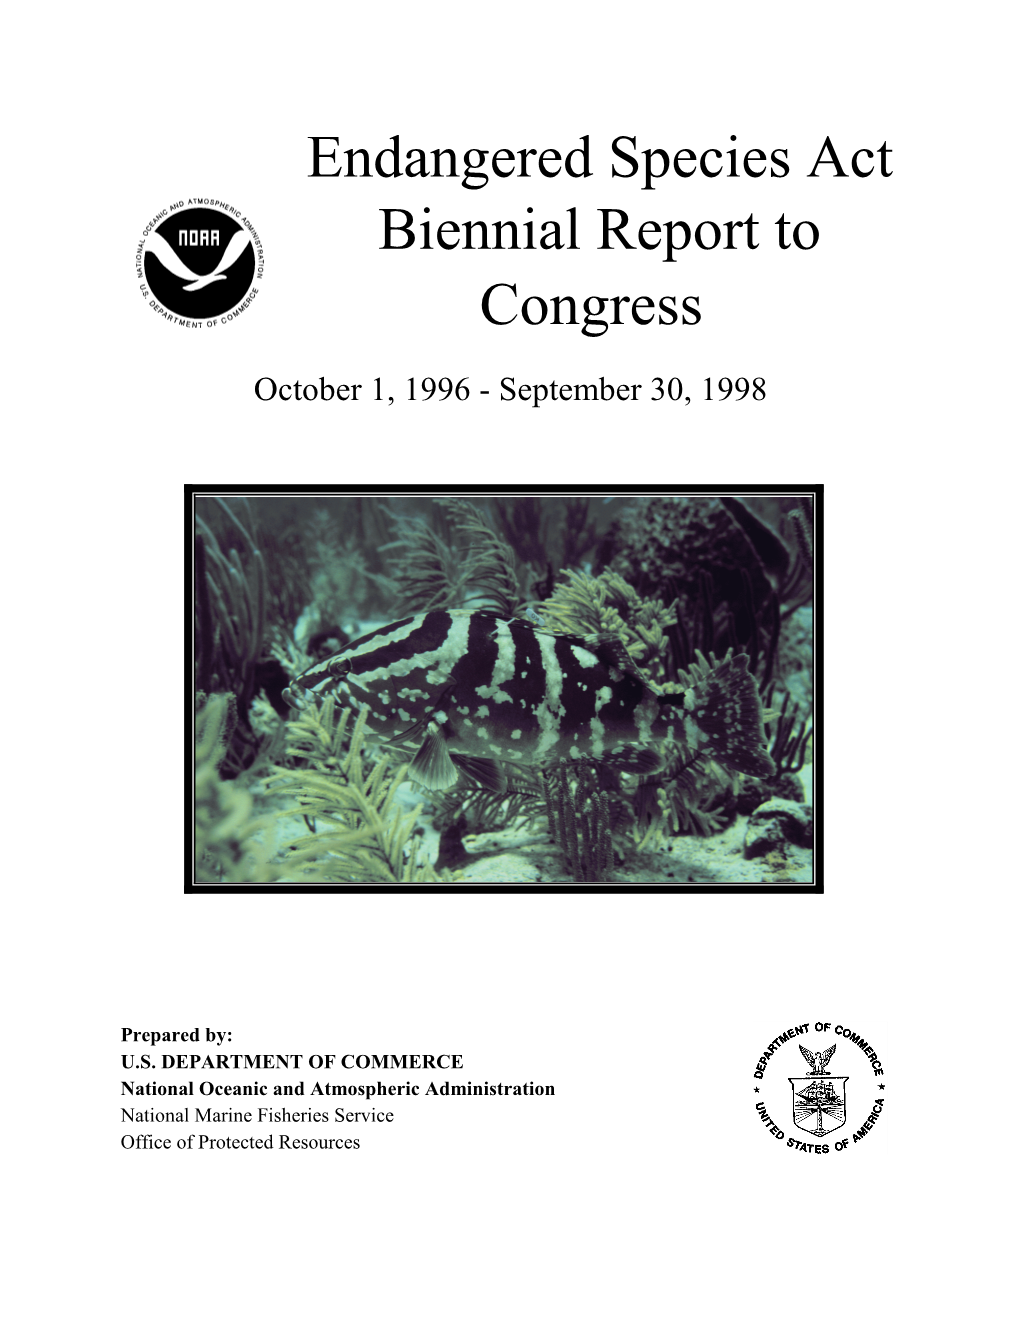 Endangered Species Act Biennial Report to Congress